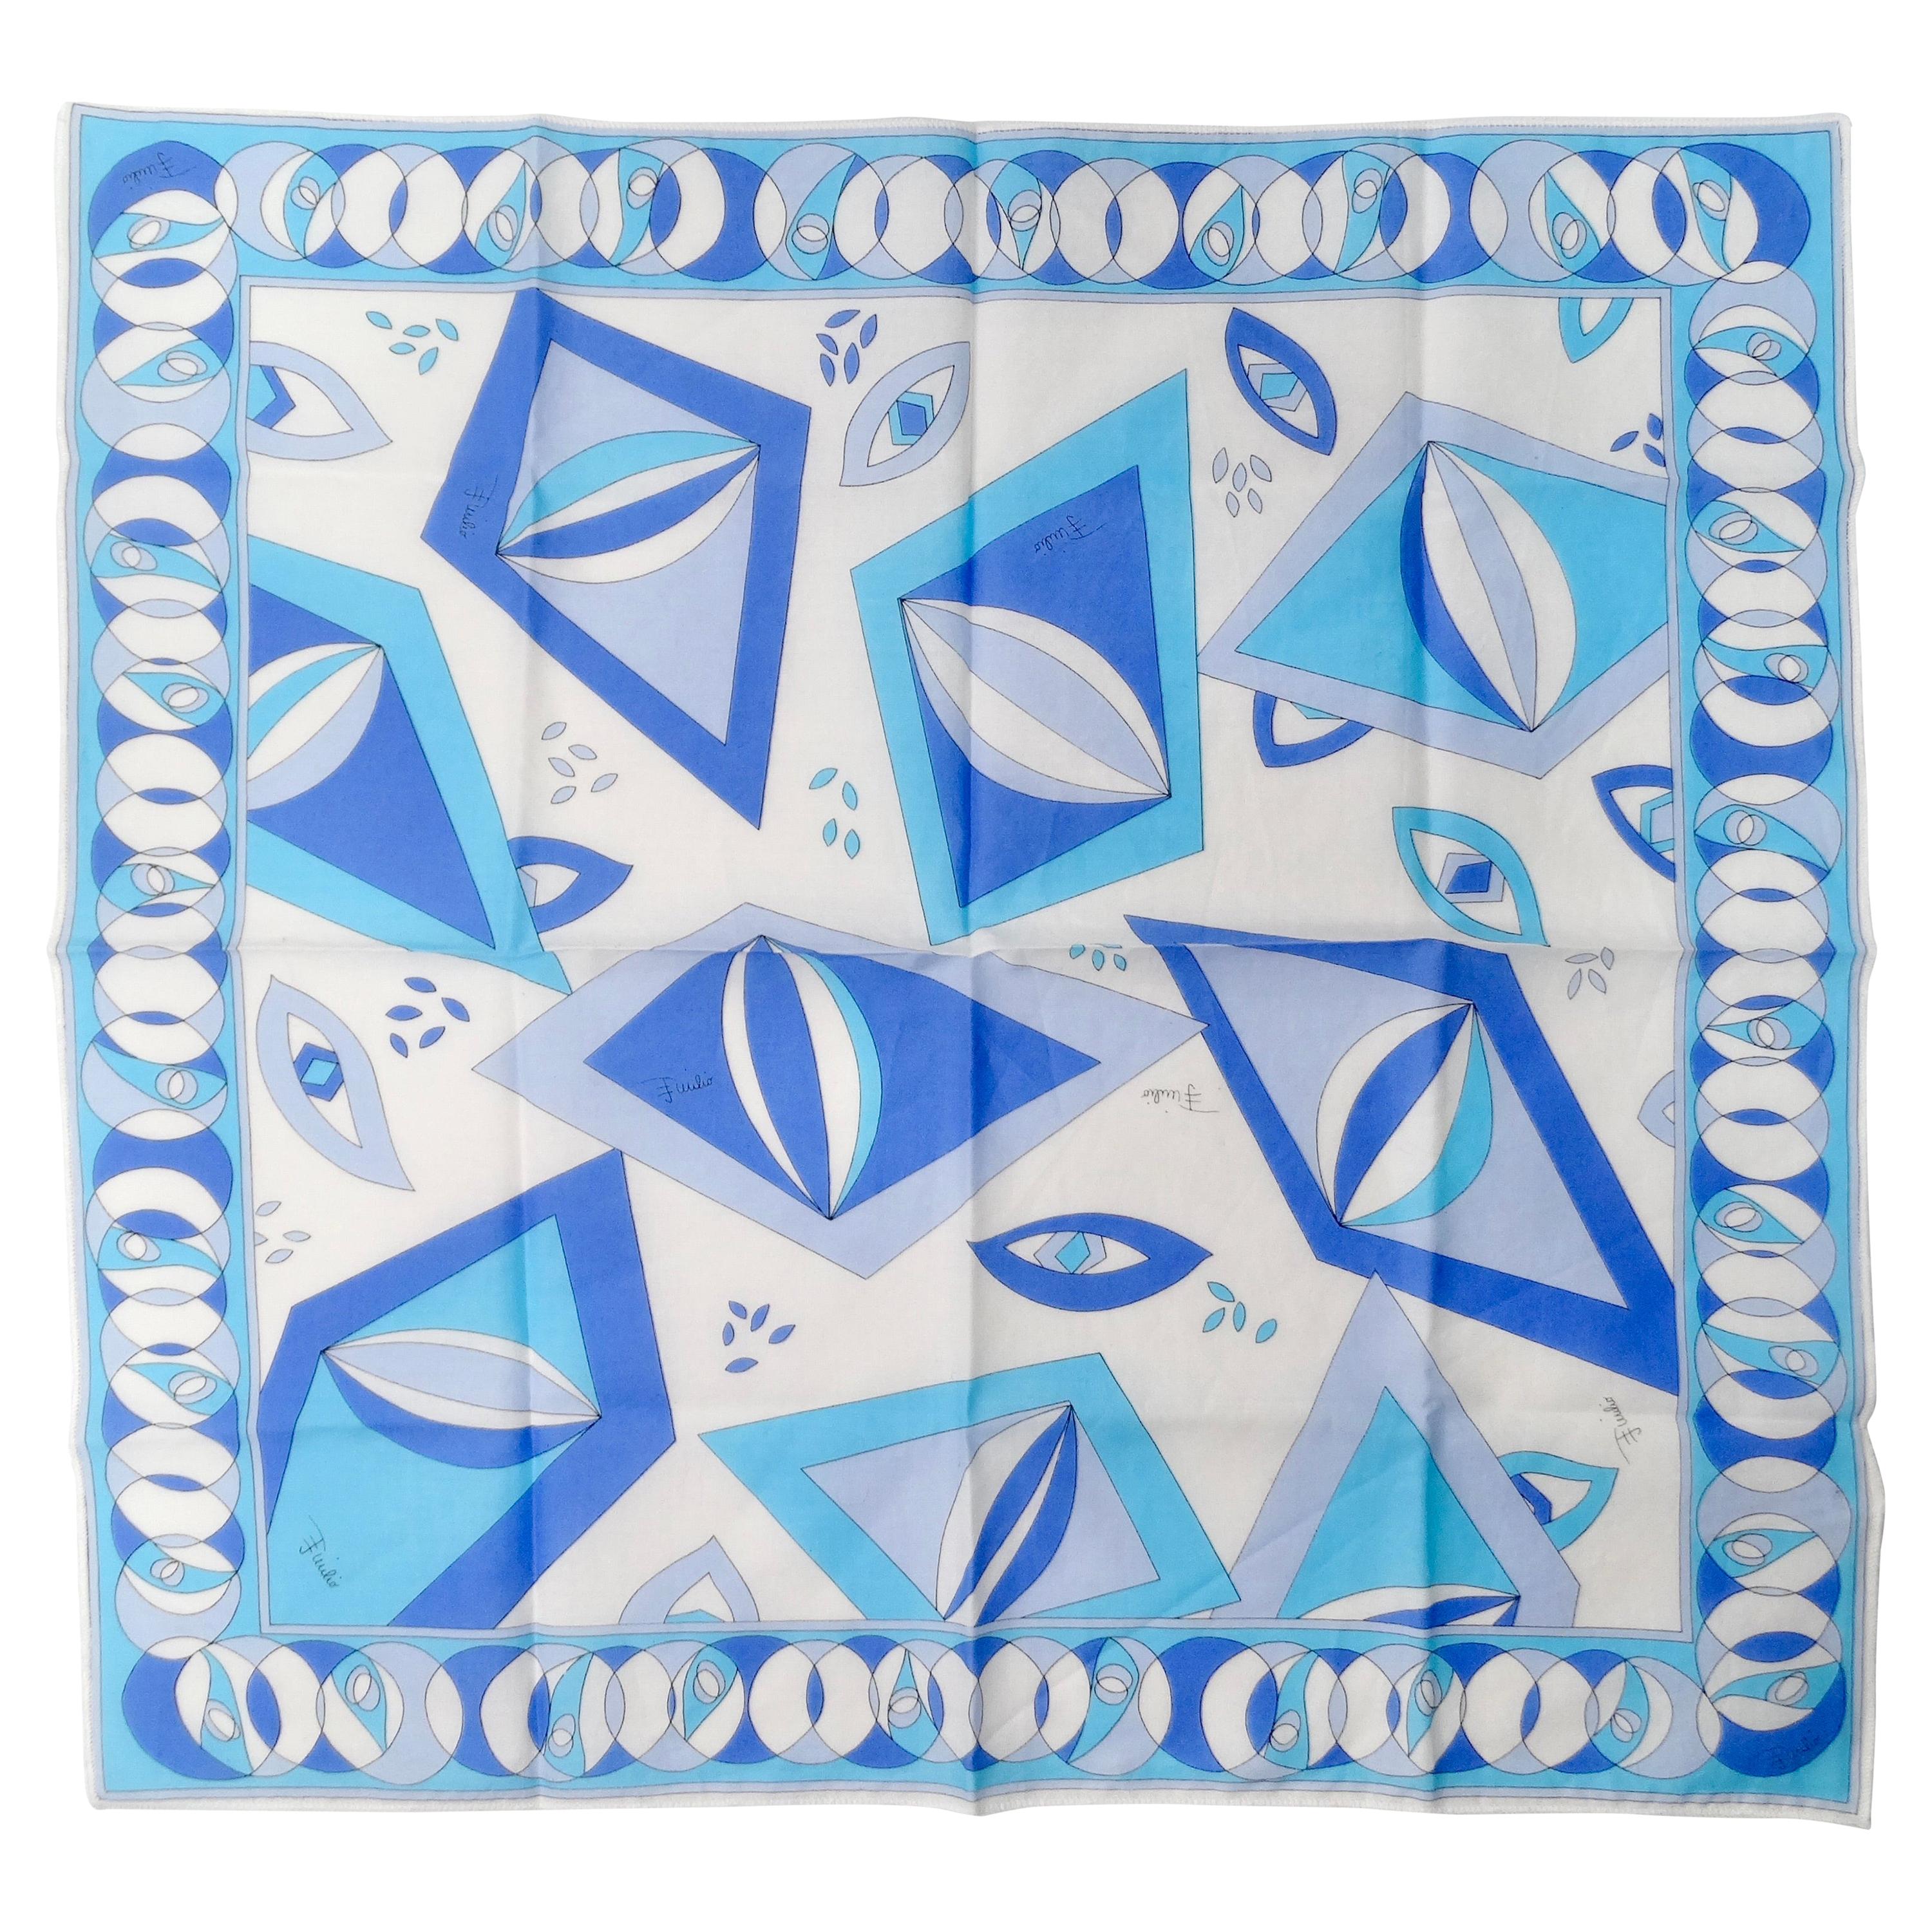 Emilio Pucci Blue Diamond Printed Scarf